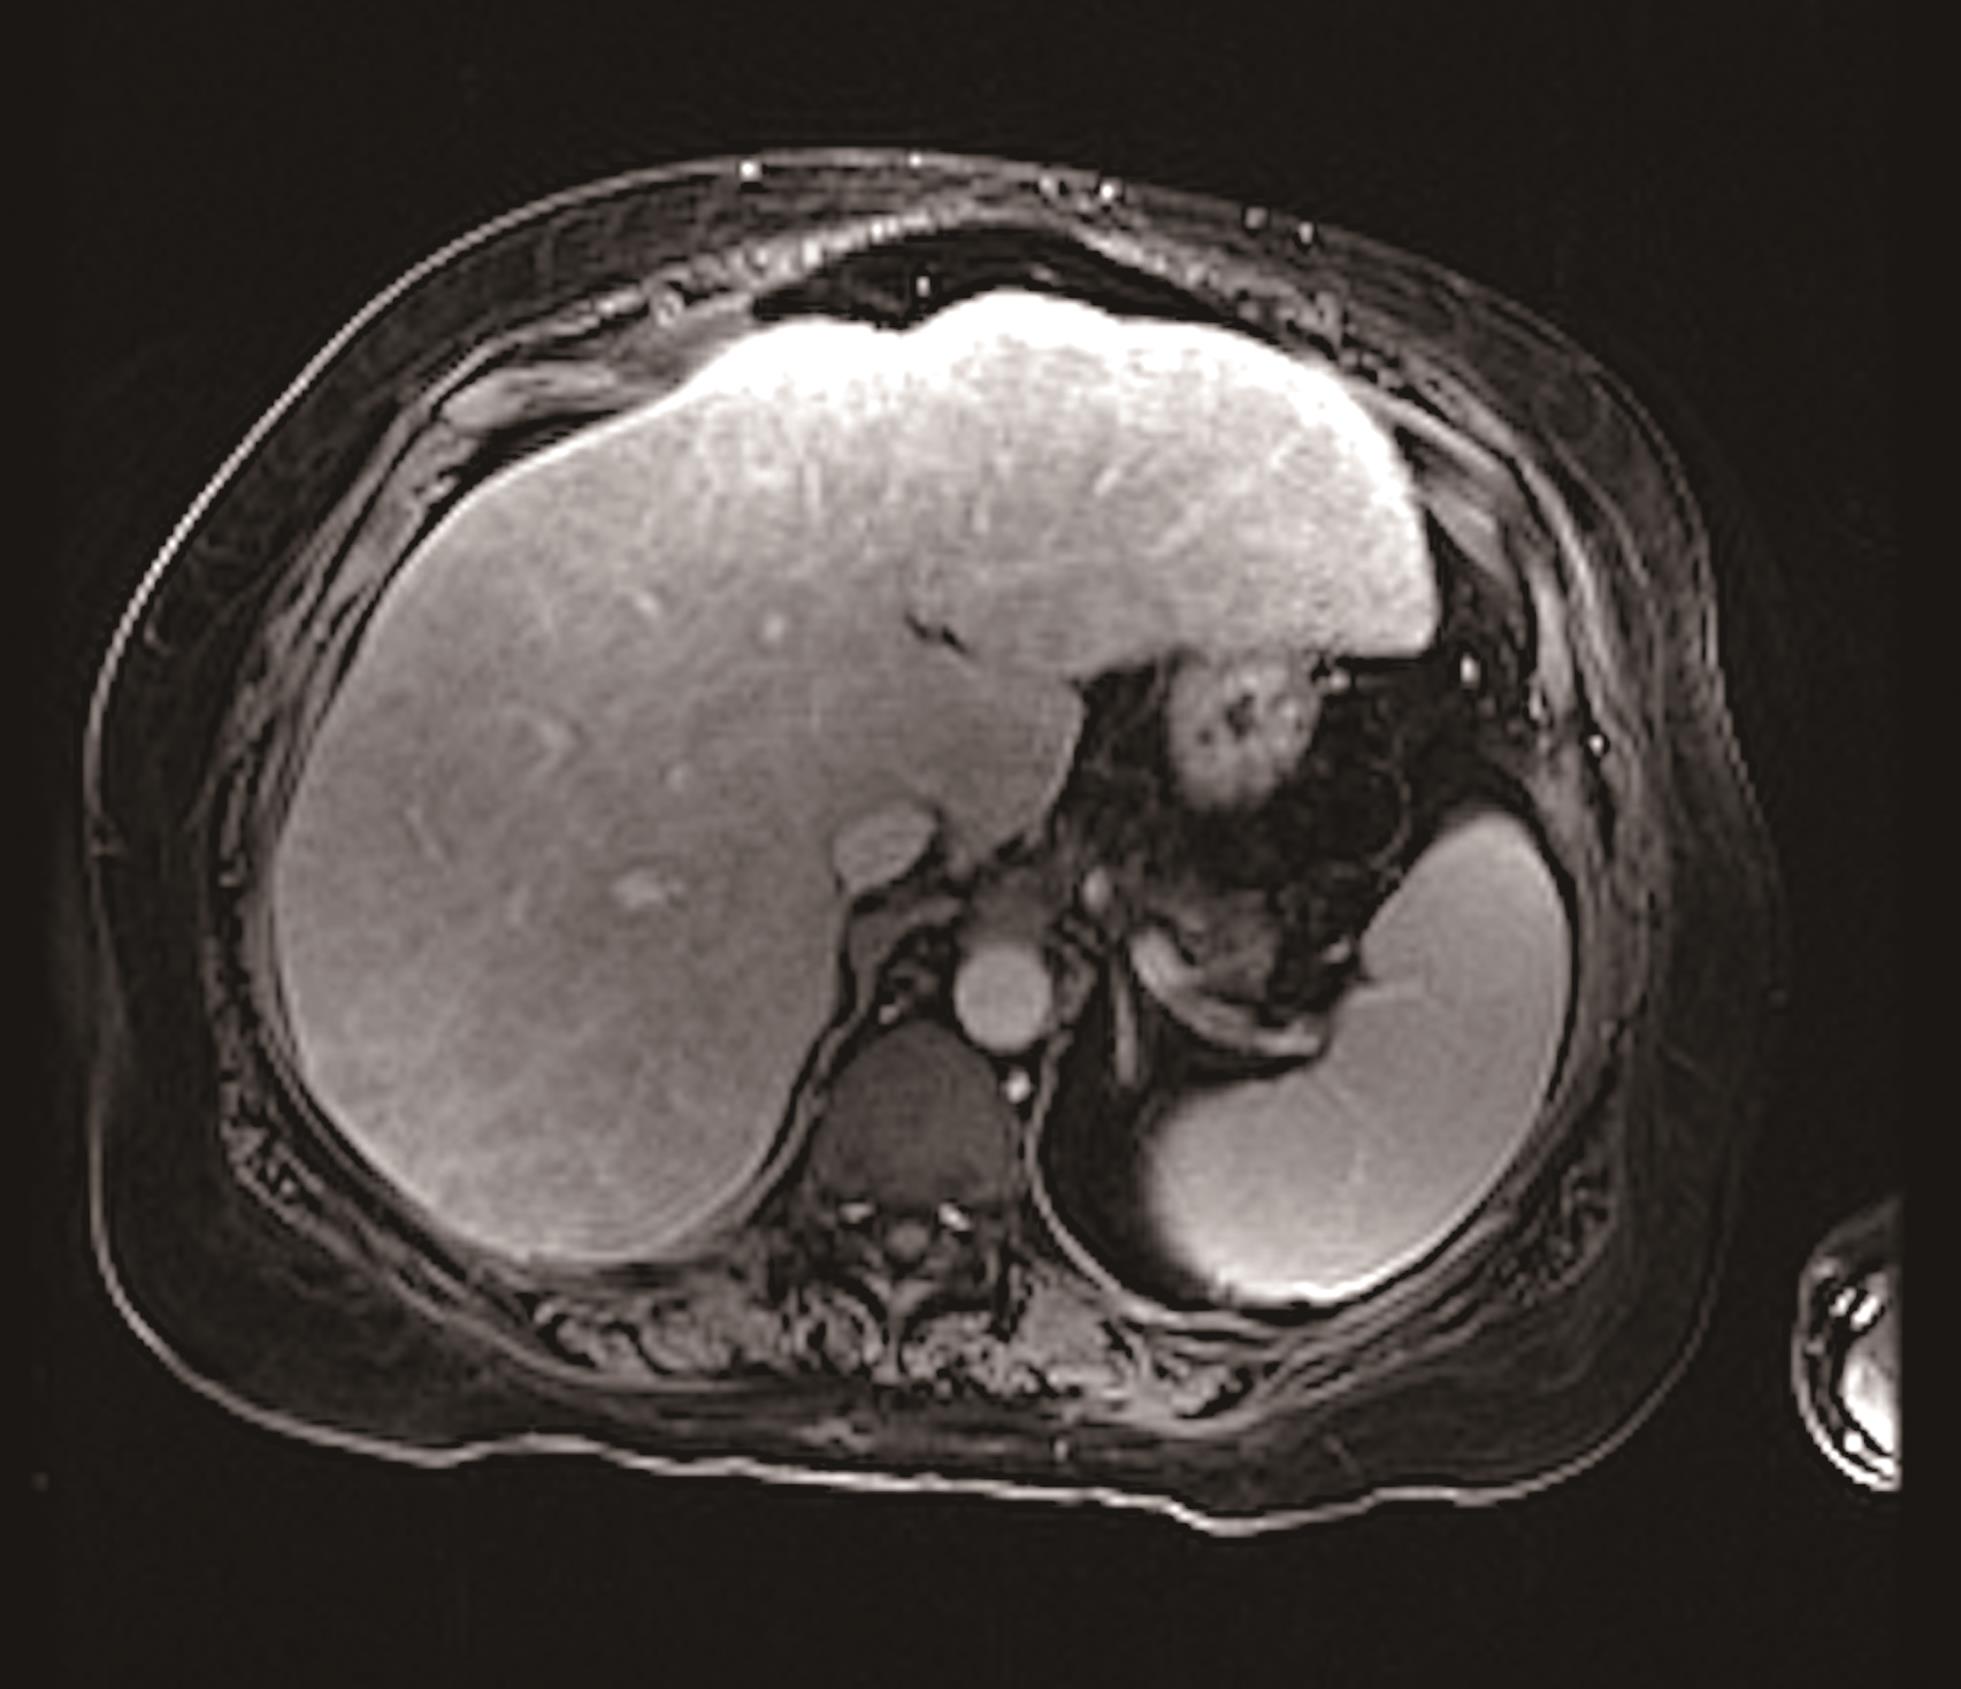 Contrast-enhanced arterial phase MRI of the liver demonstrating moderate heterogeneity (score of 3).